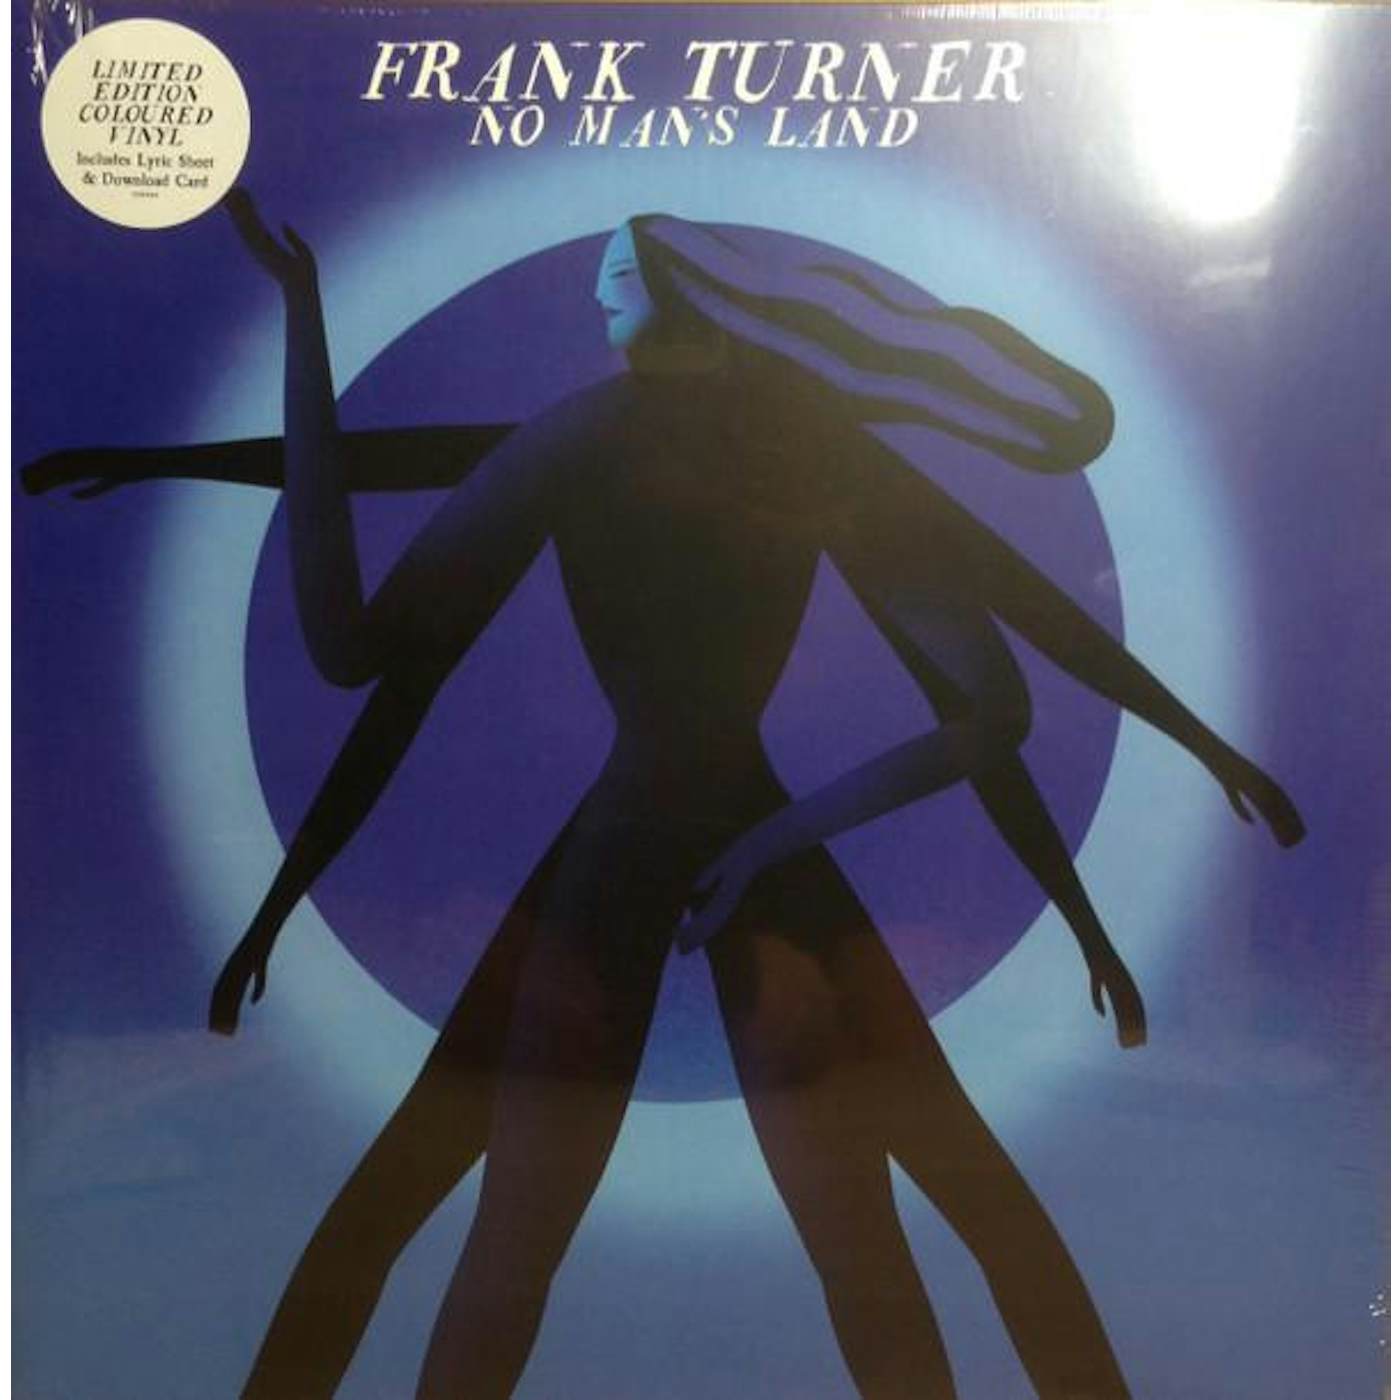 Frank Turner No Man's Land Vinyl Record